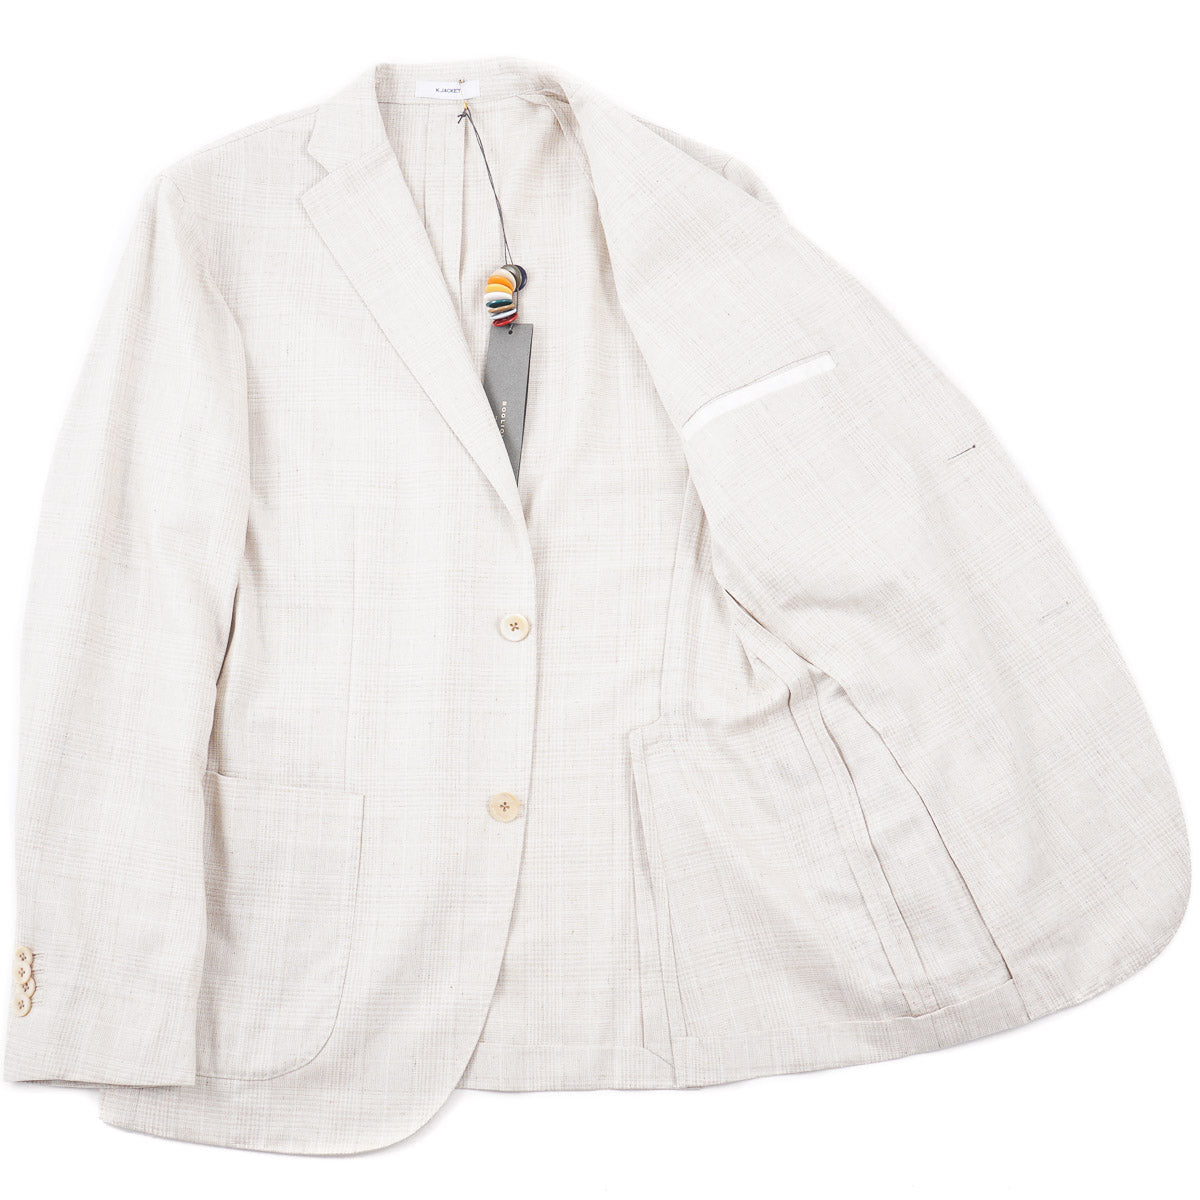 Boglioli Lightweight Silk 'K Jacket' Sport Coat - Top Shelf Apparel